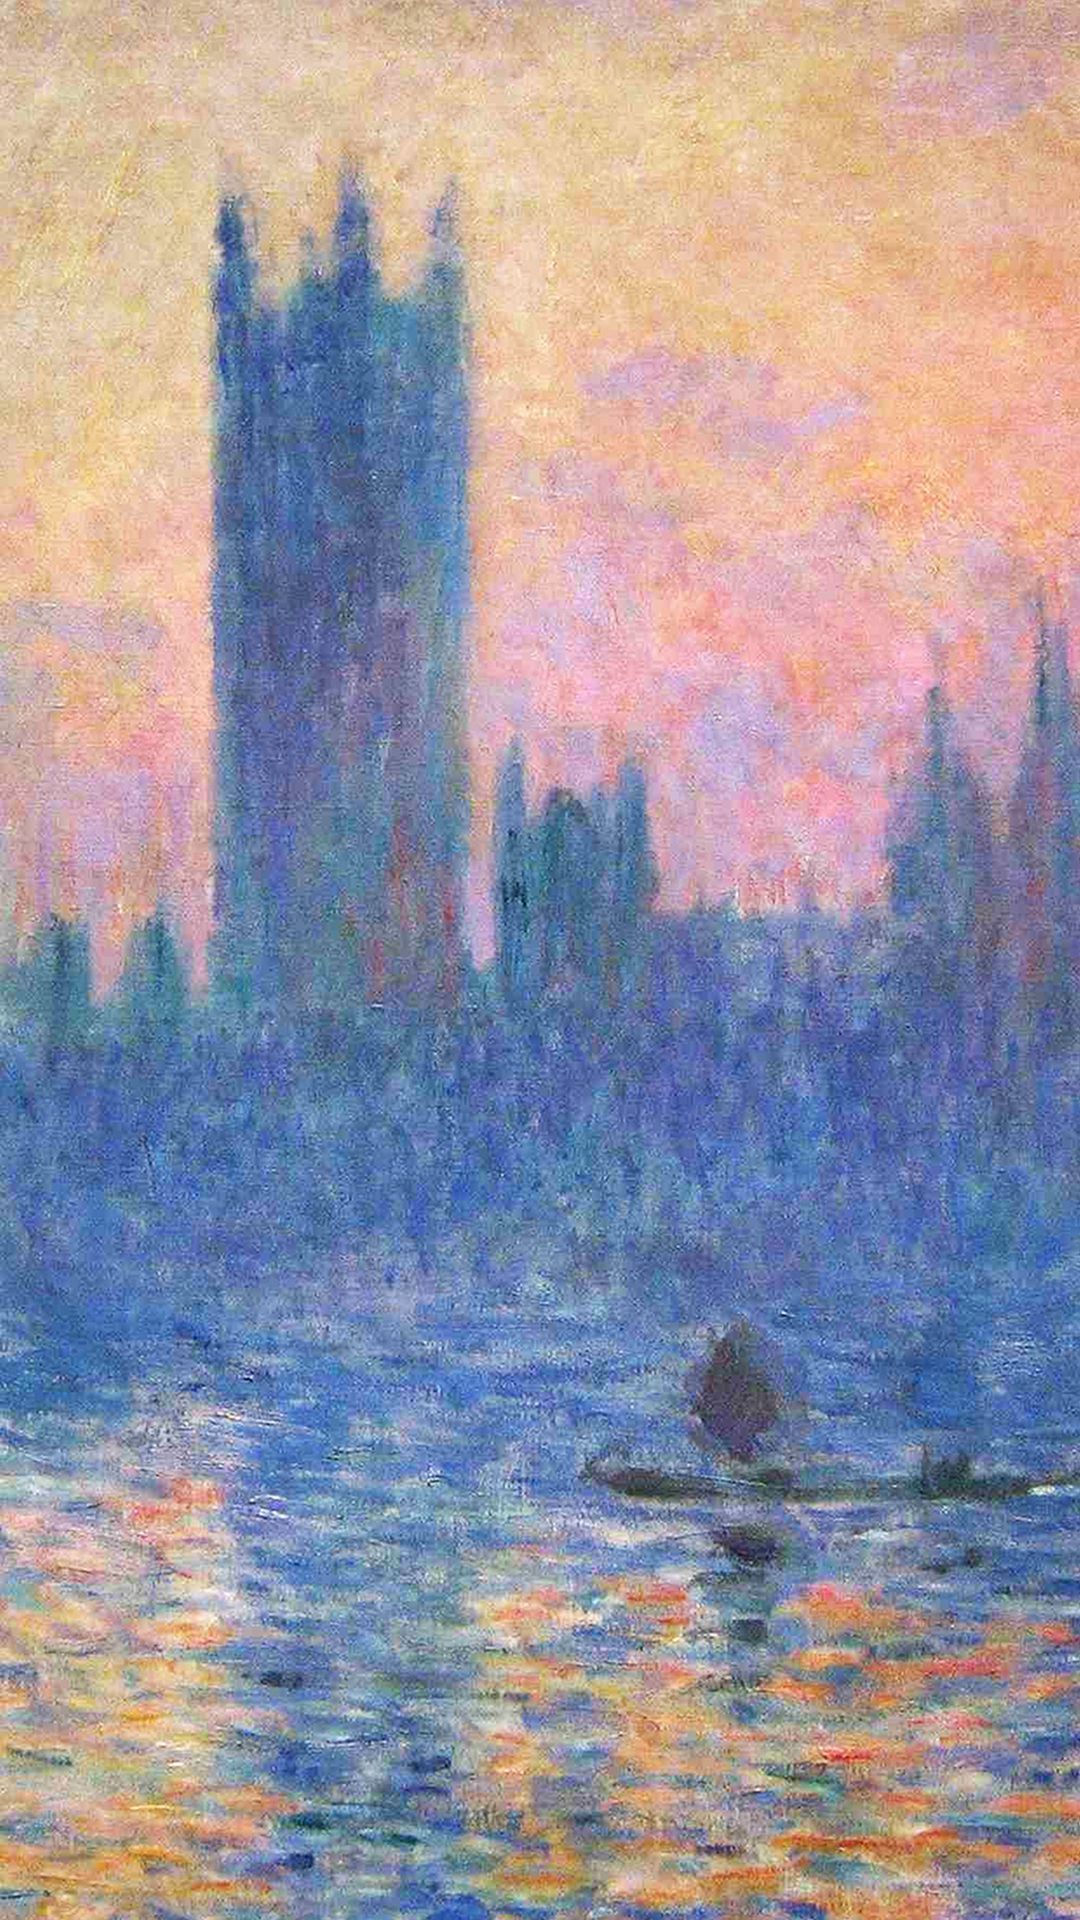 Claude Monet Classic Painting Art Sunset Pattern iPhone 6 Wallpaper Download. iPhone Wallpaper, iPad wallpaper. Painting wallpaper, Classic art, Art wallpaper